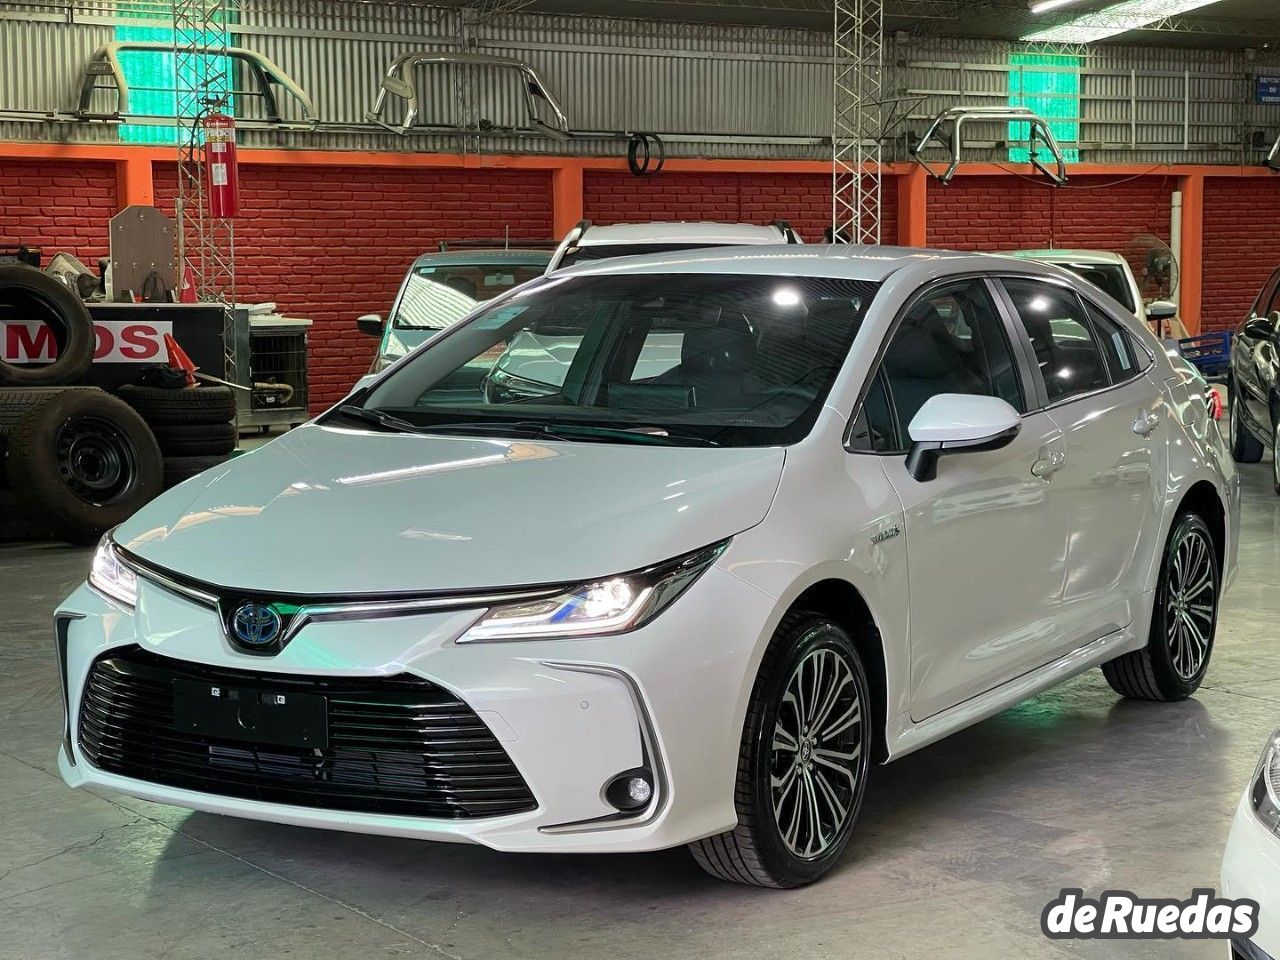 Toyota Corolla Nuevo en San Juan, deRuedas